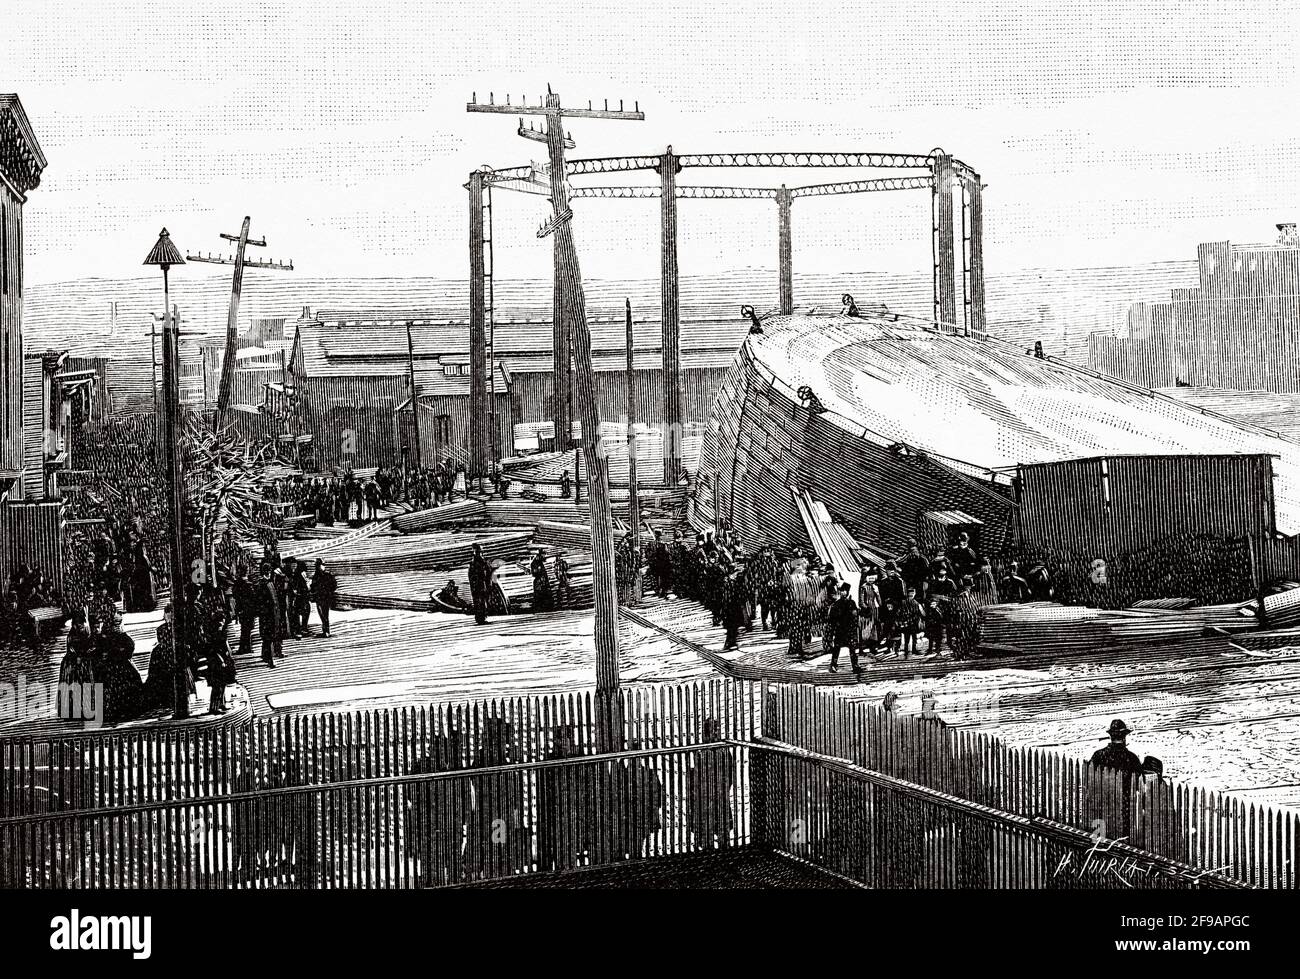 Brooklyn Gas Explosion, Januar 1889. New York City, USA, USA. Alte, gravierte Illustration aus dem 19. Jahrhundert von La Nature 1889 Stockfoto